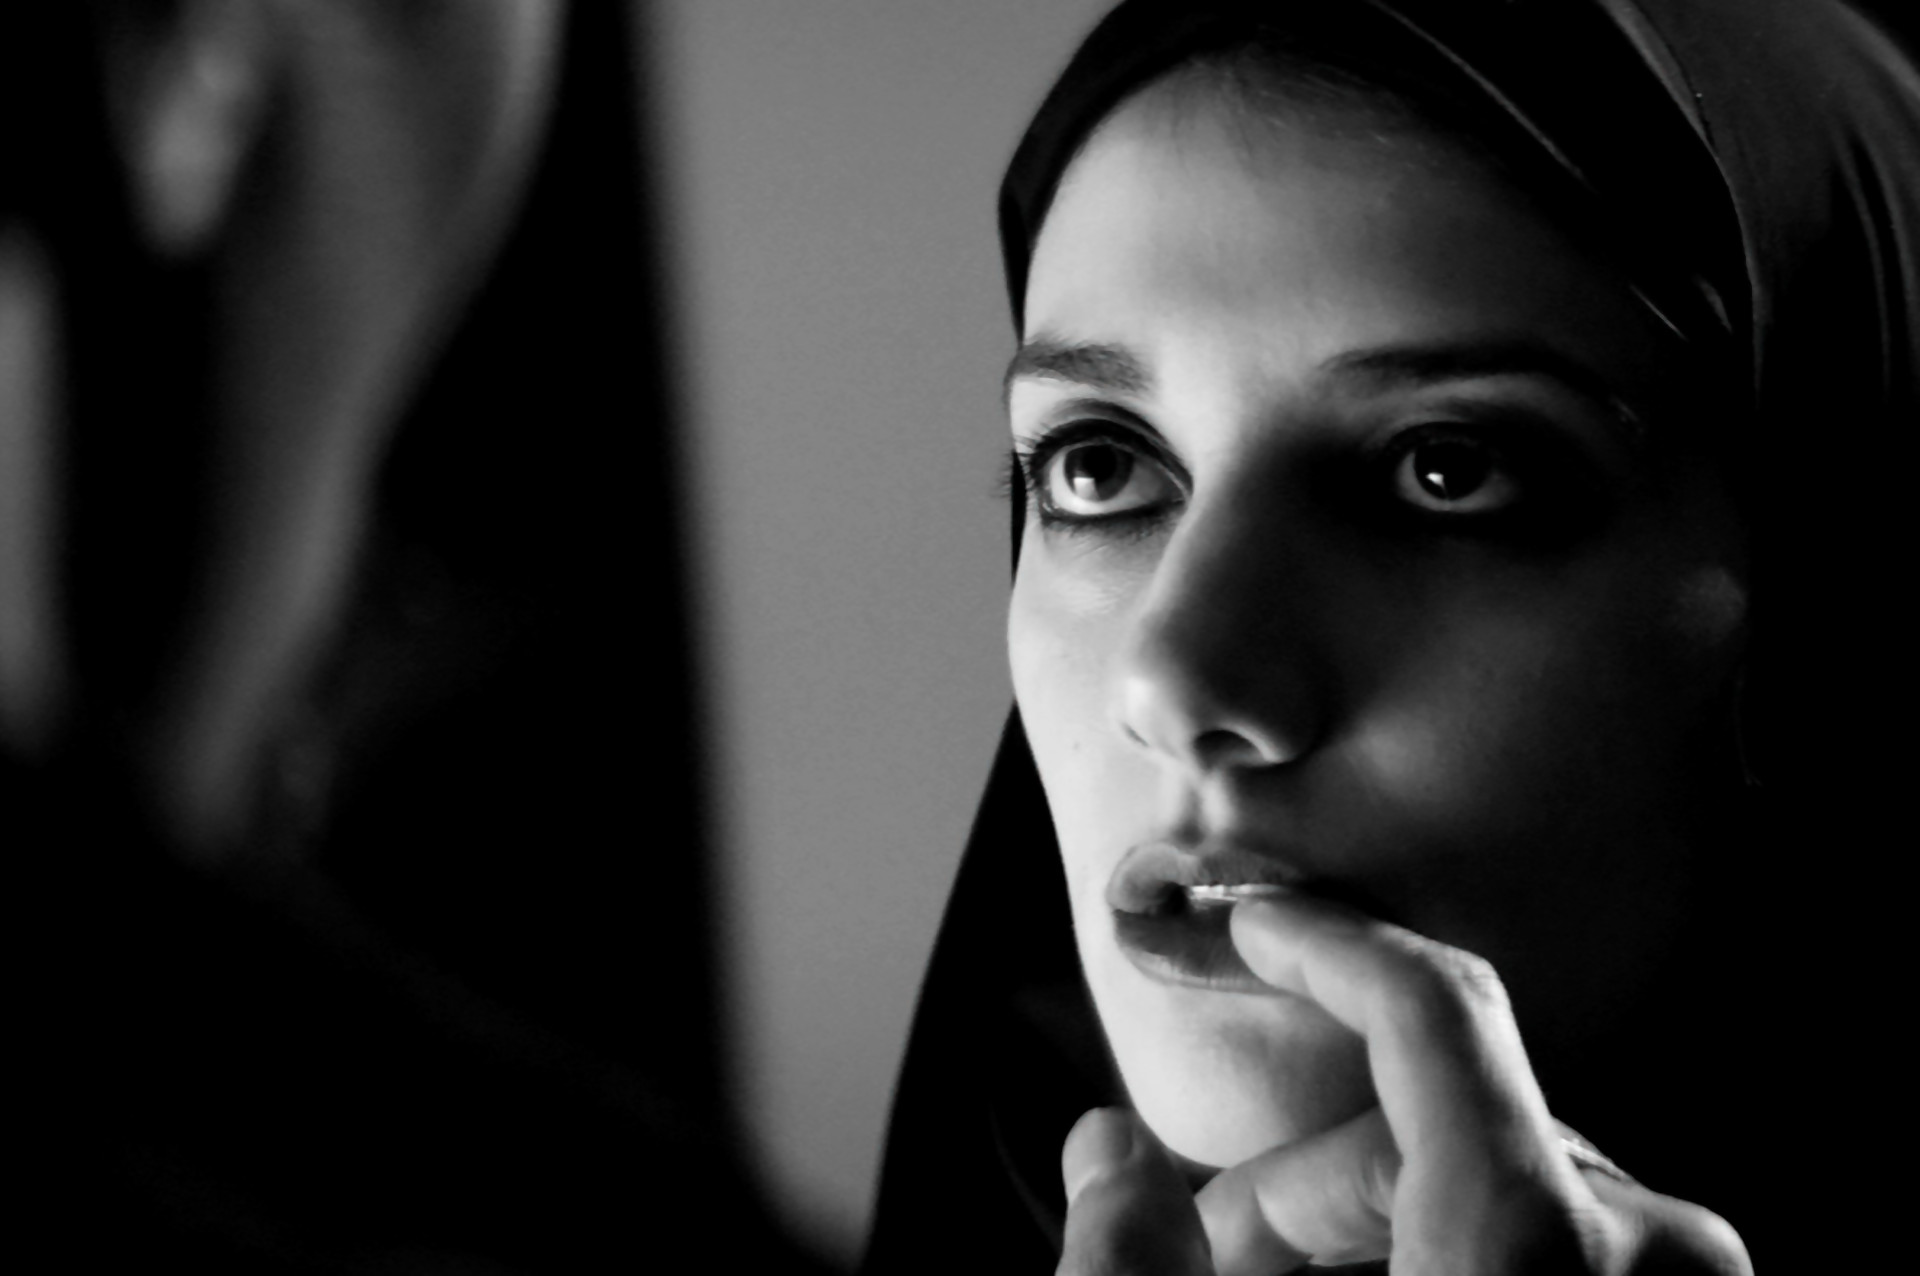 İran'ın İlk Vampir Filmi A Girl Walks Home Alone At Night